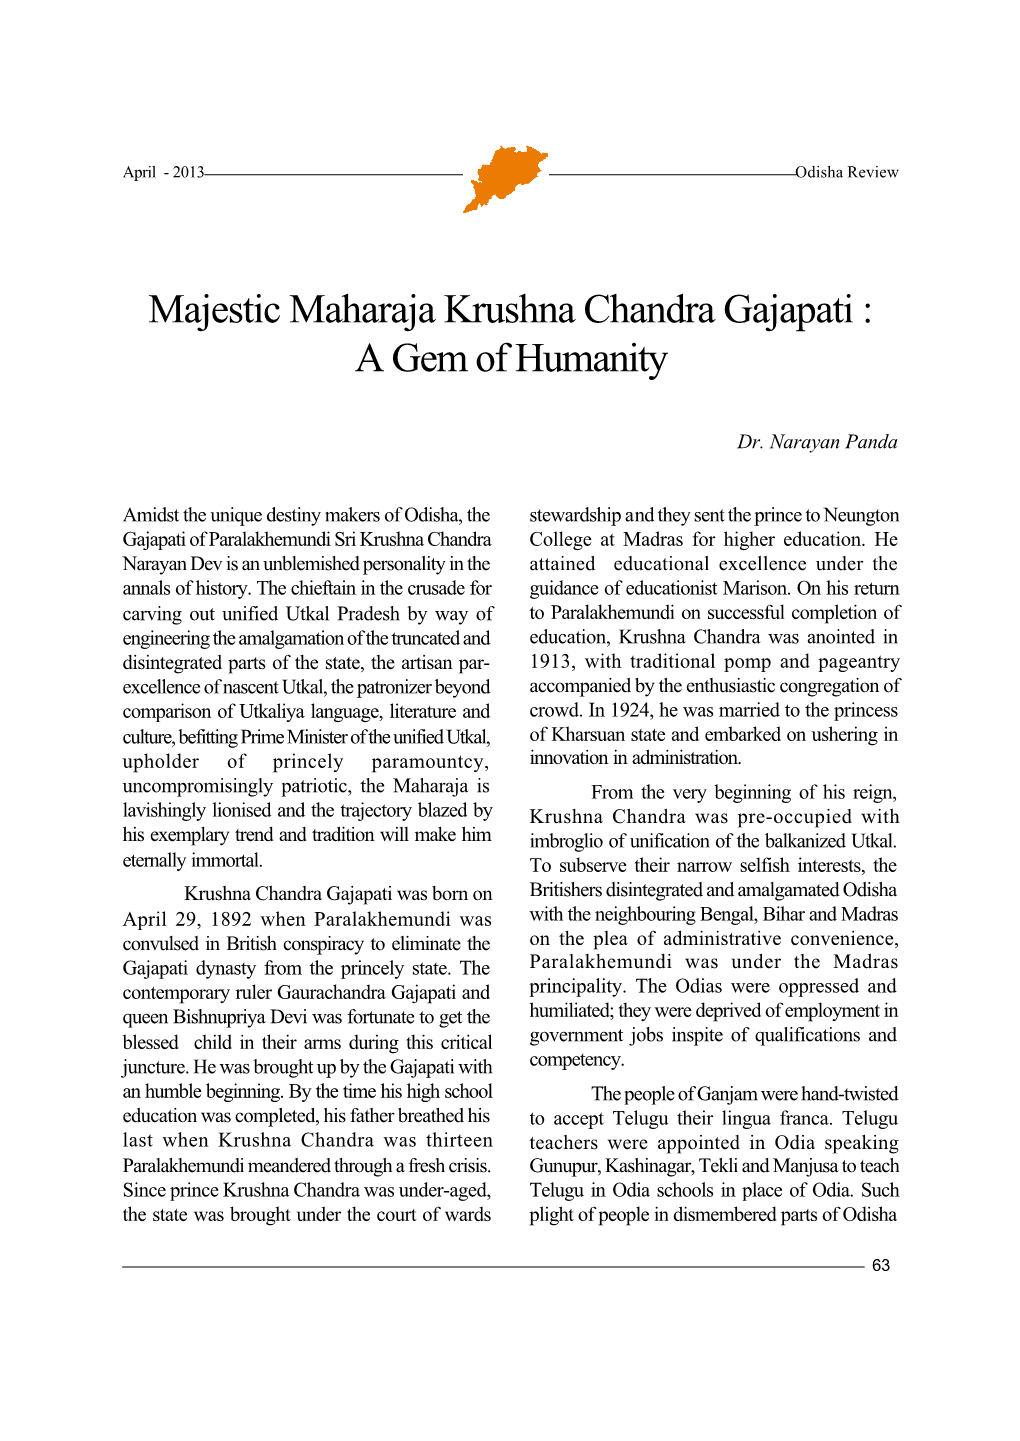 Majestic Maharaja Krushna Chandra Gajapati : a Gem of Humanity